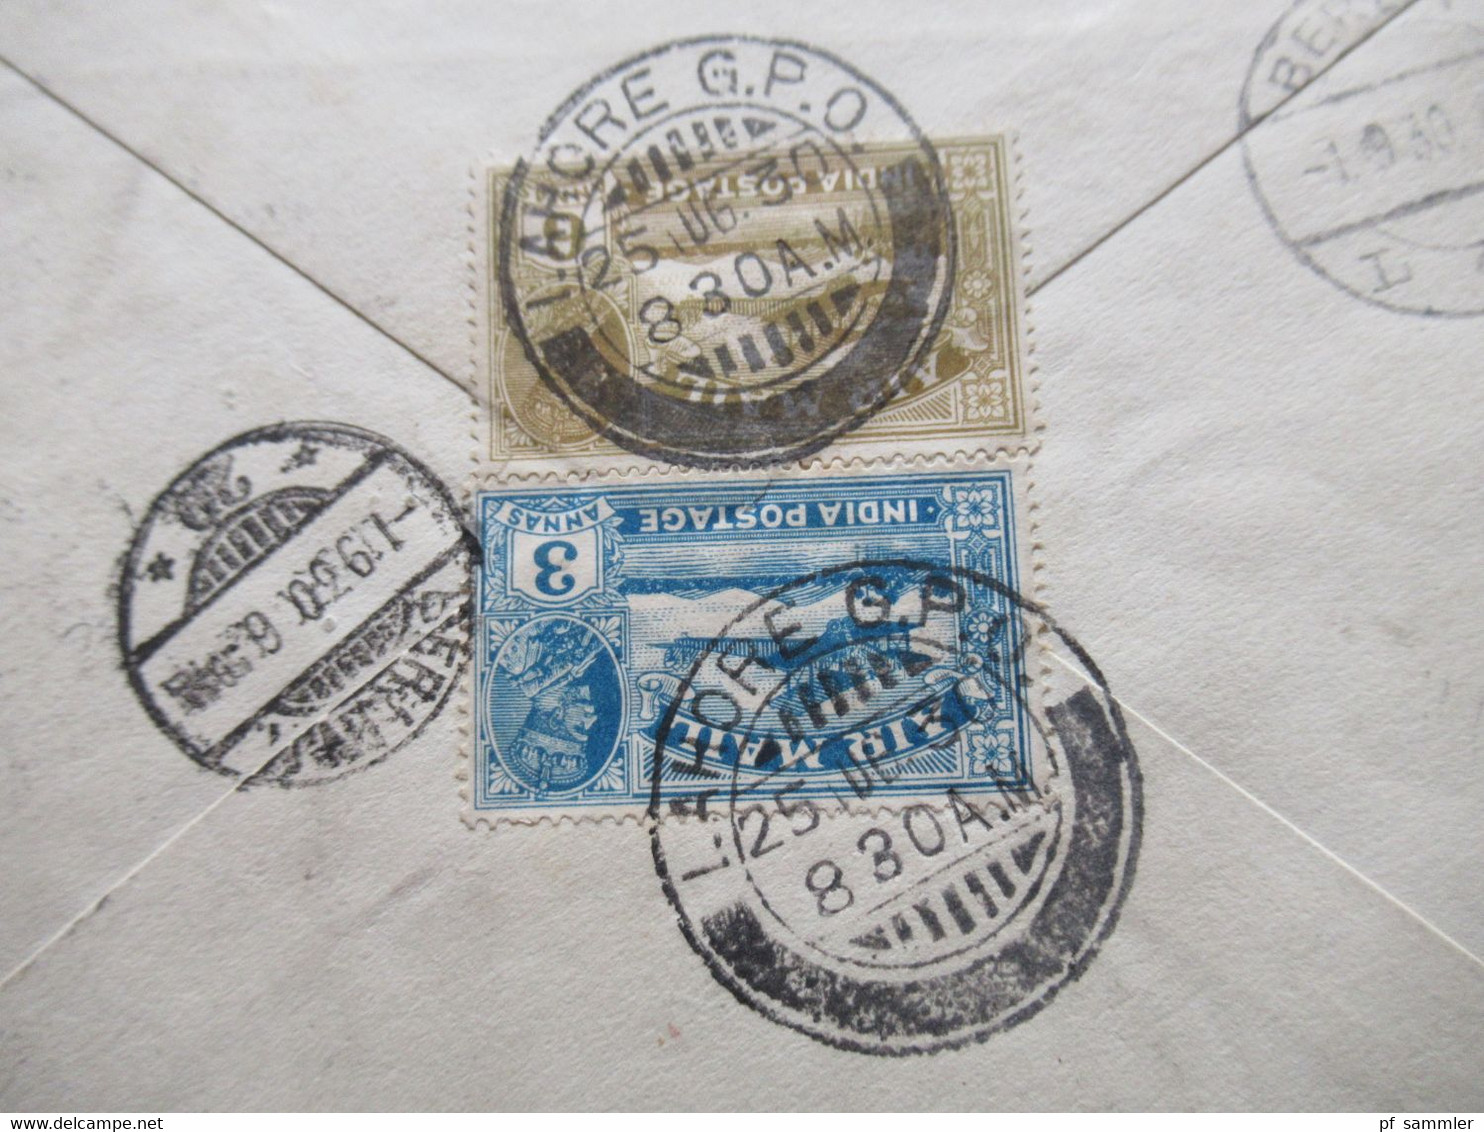 1930 Air Mail LuPo Marken Nr. 119 U. 121 Standart Electric Trading Lahore - Berlin. Roter Stp. Mit Luftpost Befördert - 1911-35 King George V